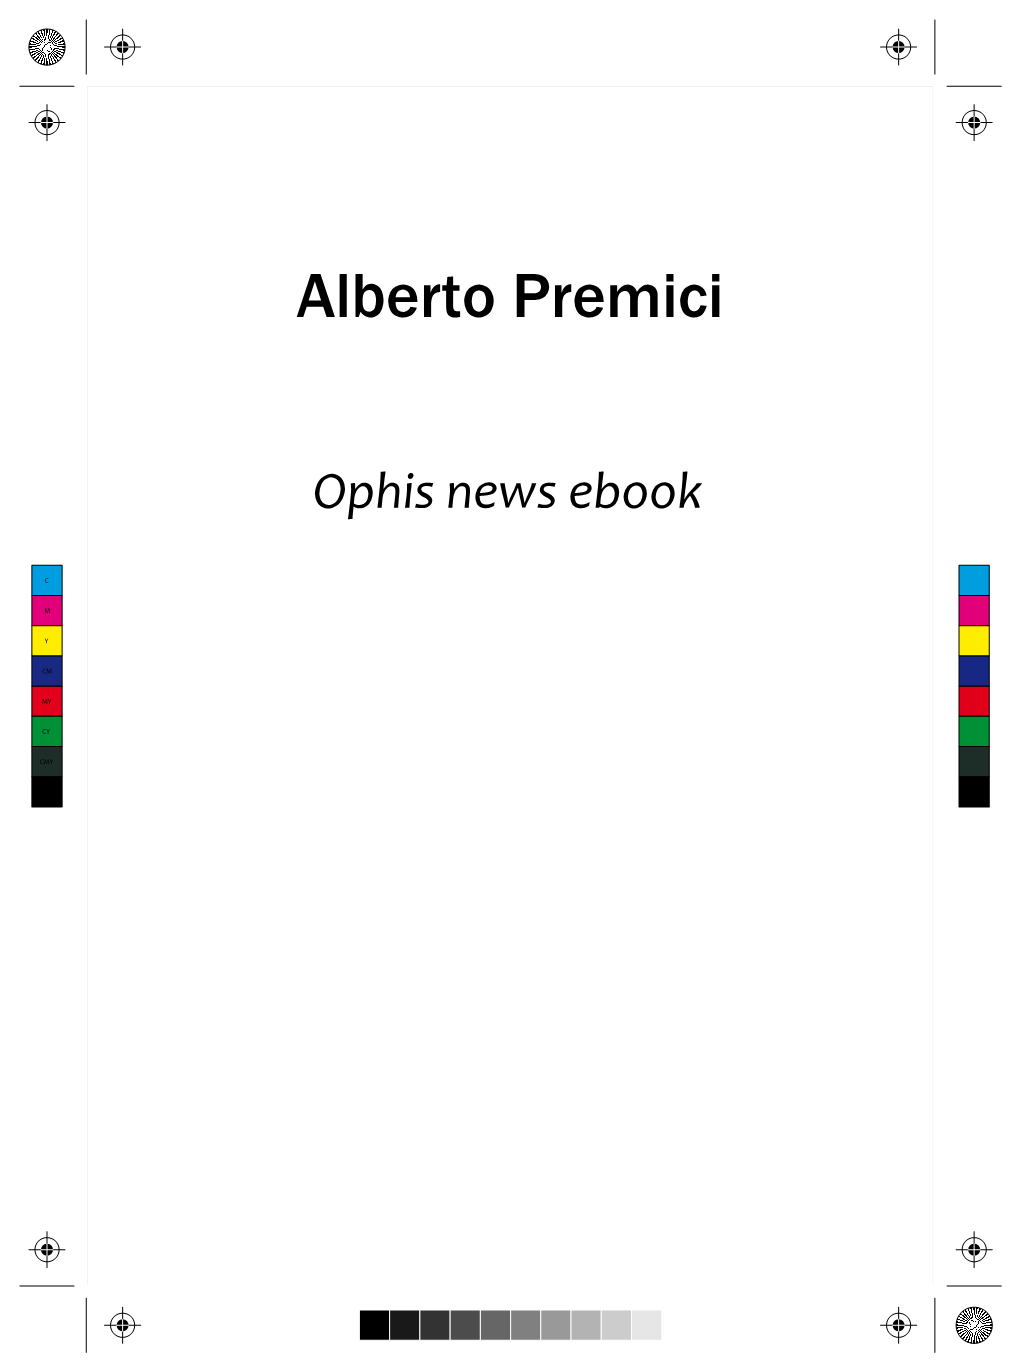 Ophis News Ebook